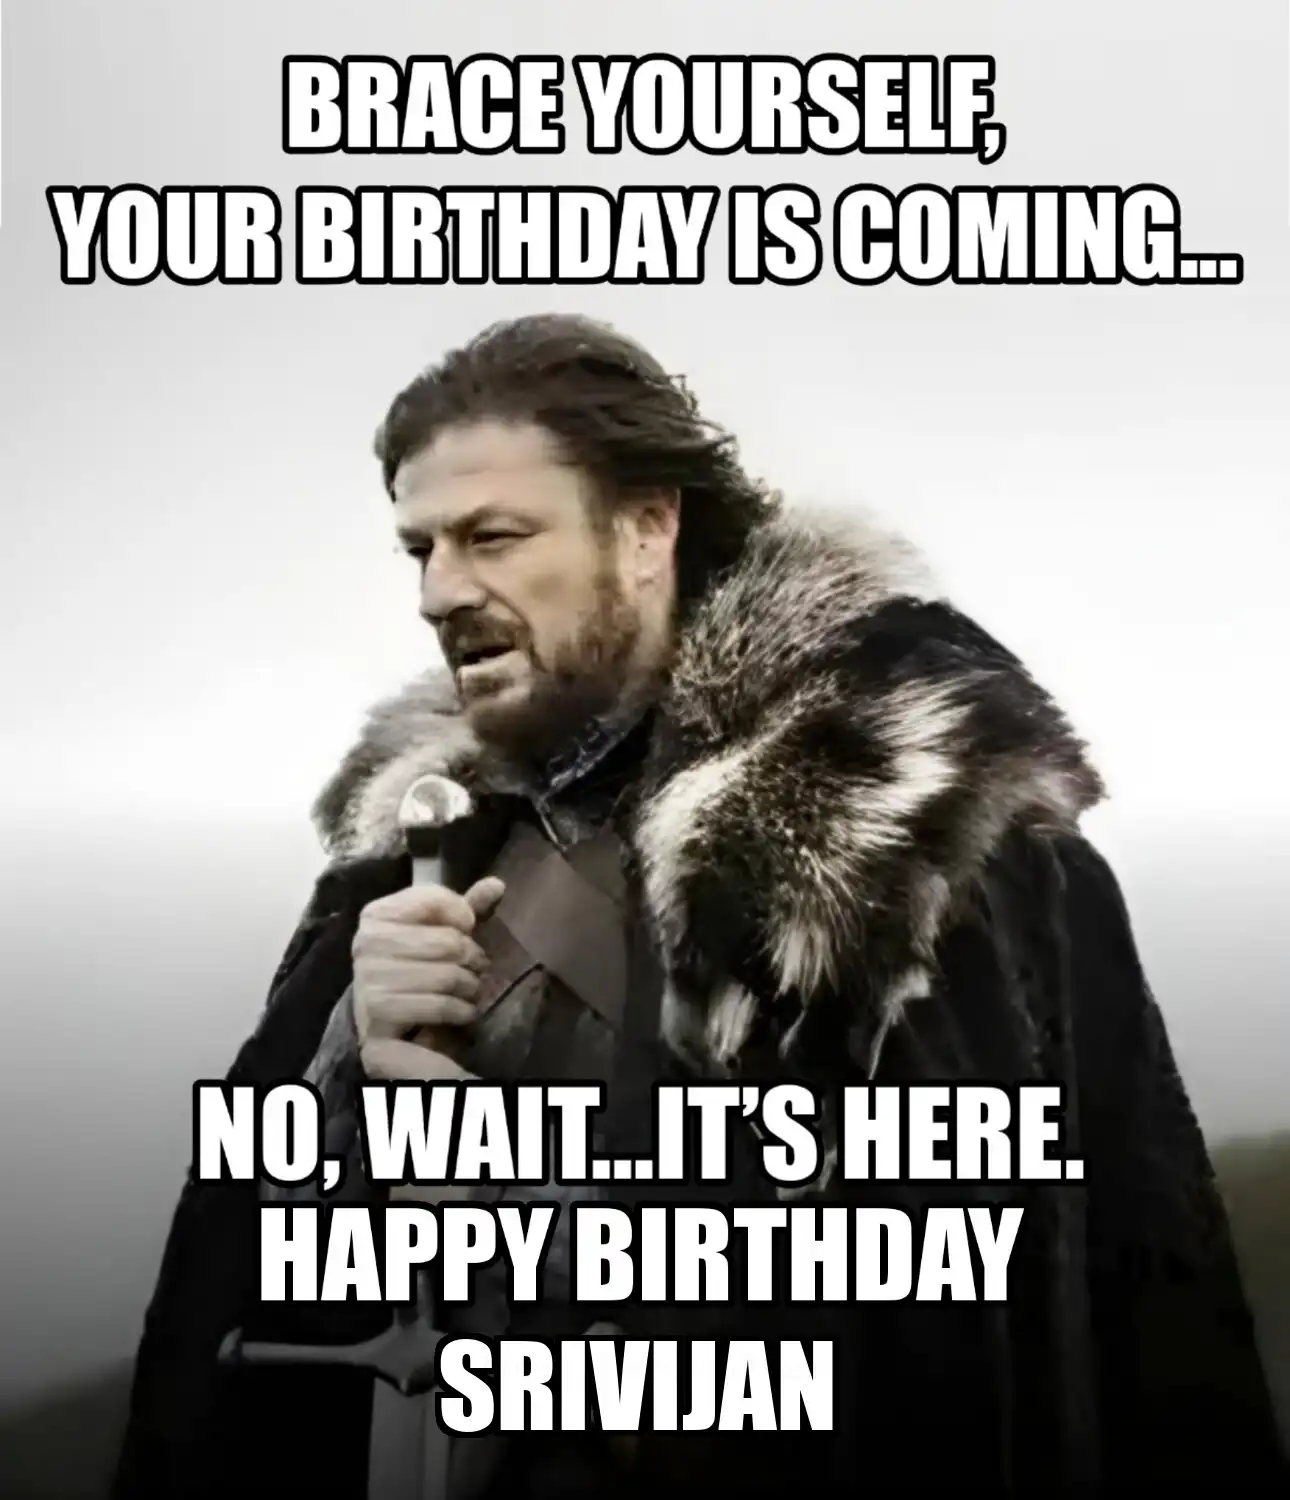 Happy Birthday Srivijan Brace Yourself Your Birthday Is Coming Meme